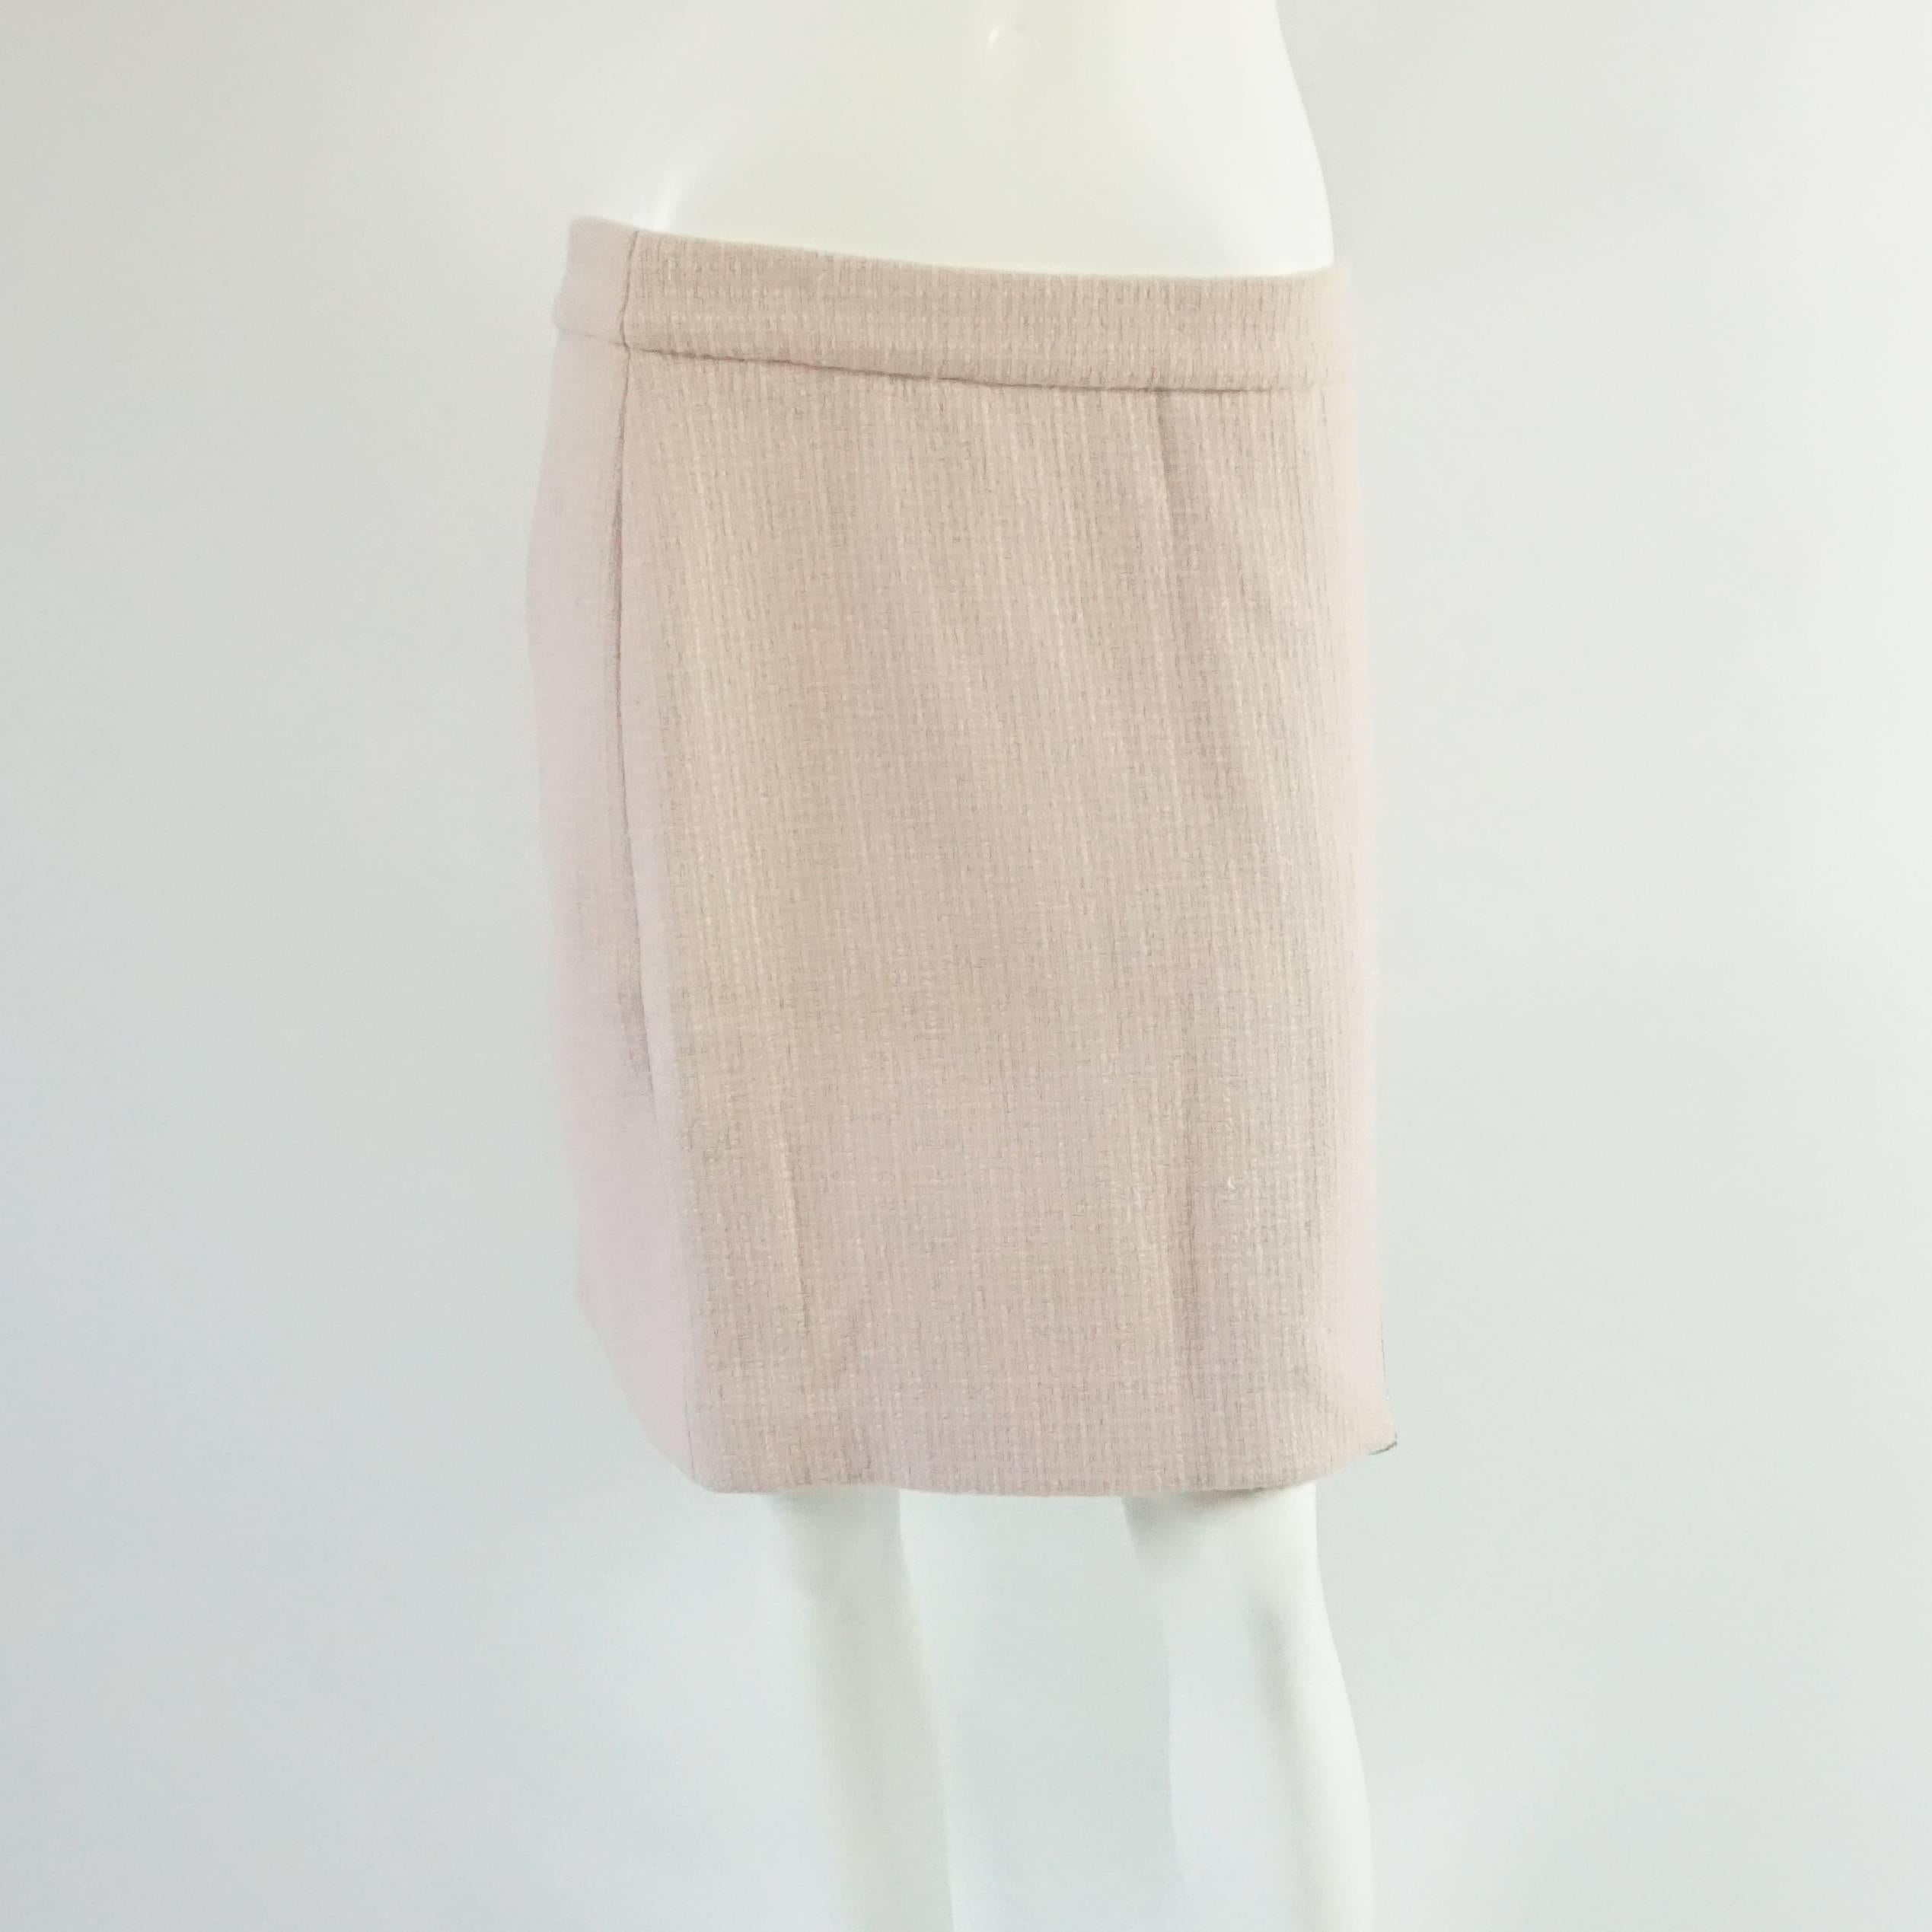 Beige Dolce & Gabbana Pink Tweed Skirt Suit with a Rhinestone Trim